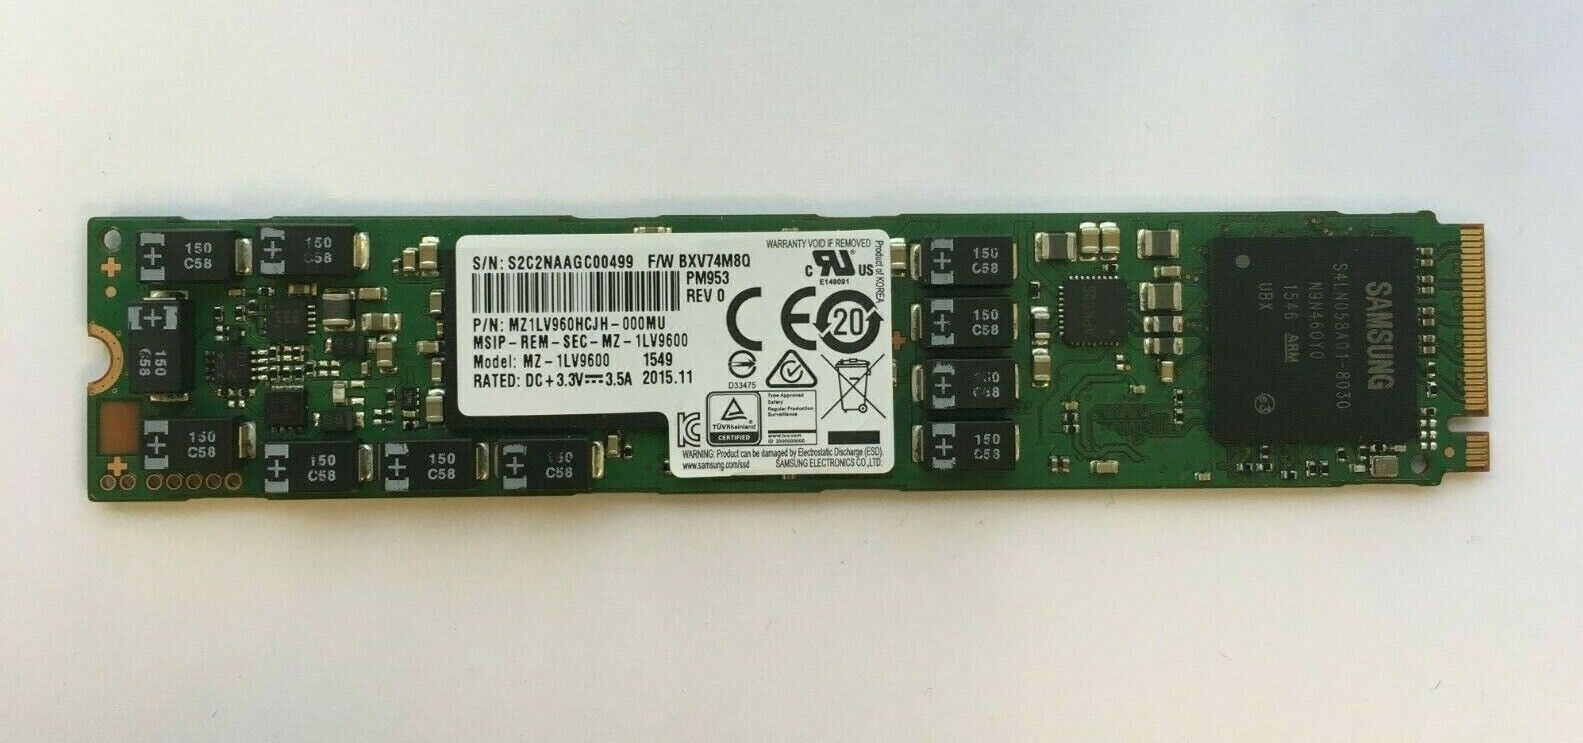 SAMSUNG 960GB PM953 PCIe MZ-1LV9600 SSD NVMe 110mm MZ1LV960HCJH